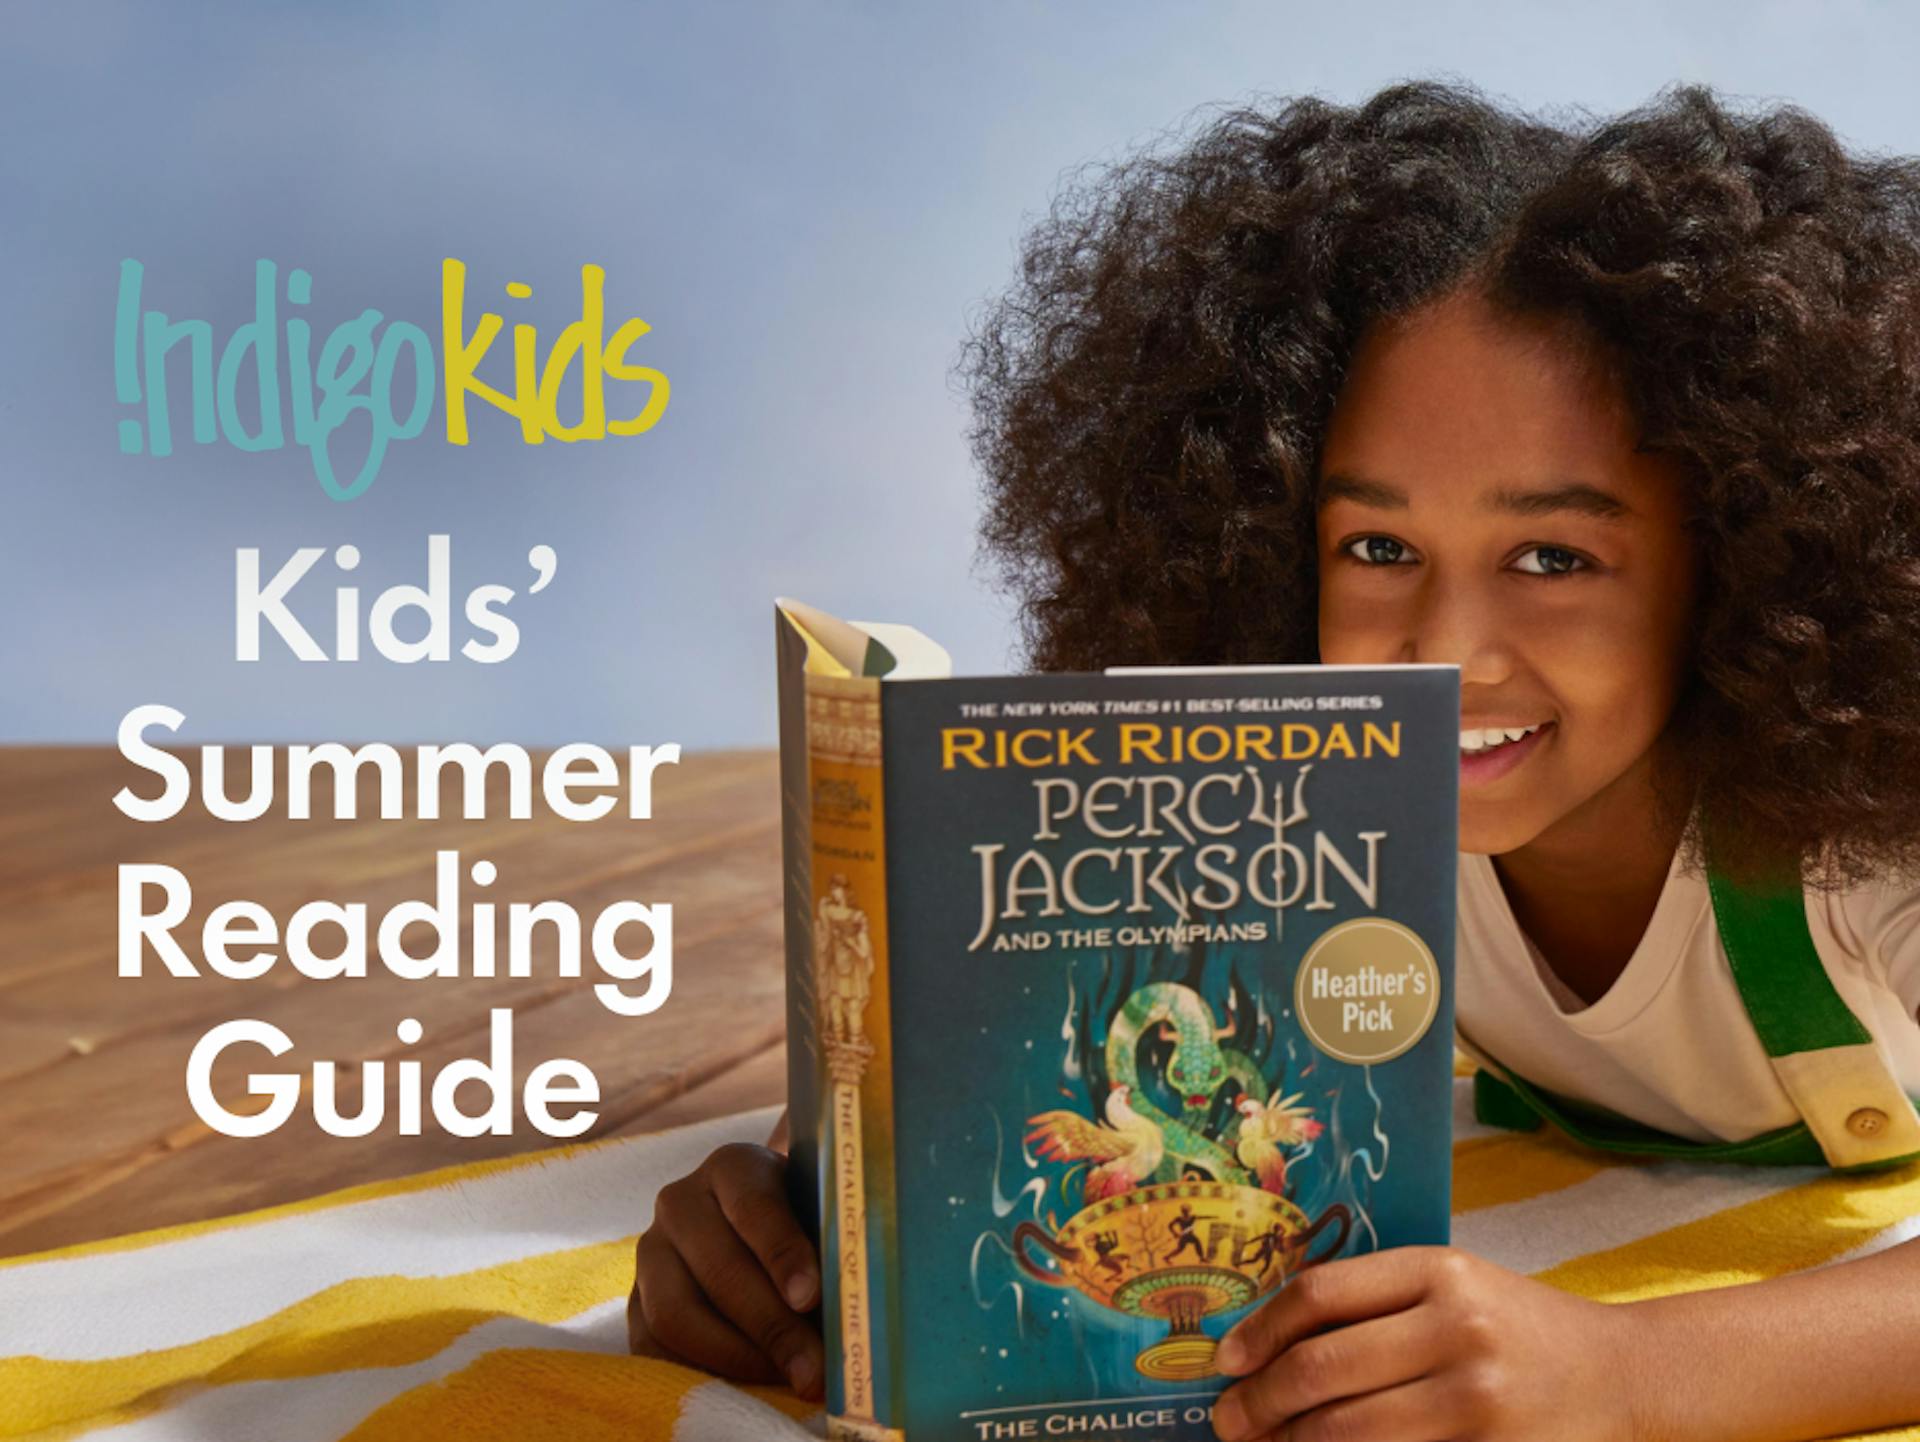 Indigo Kids summer reading guide